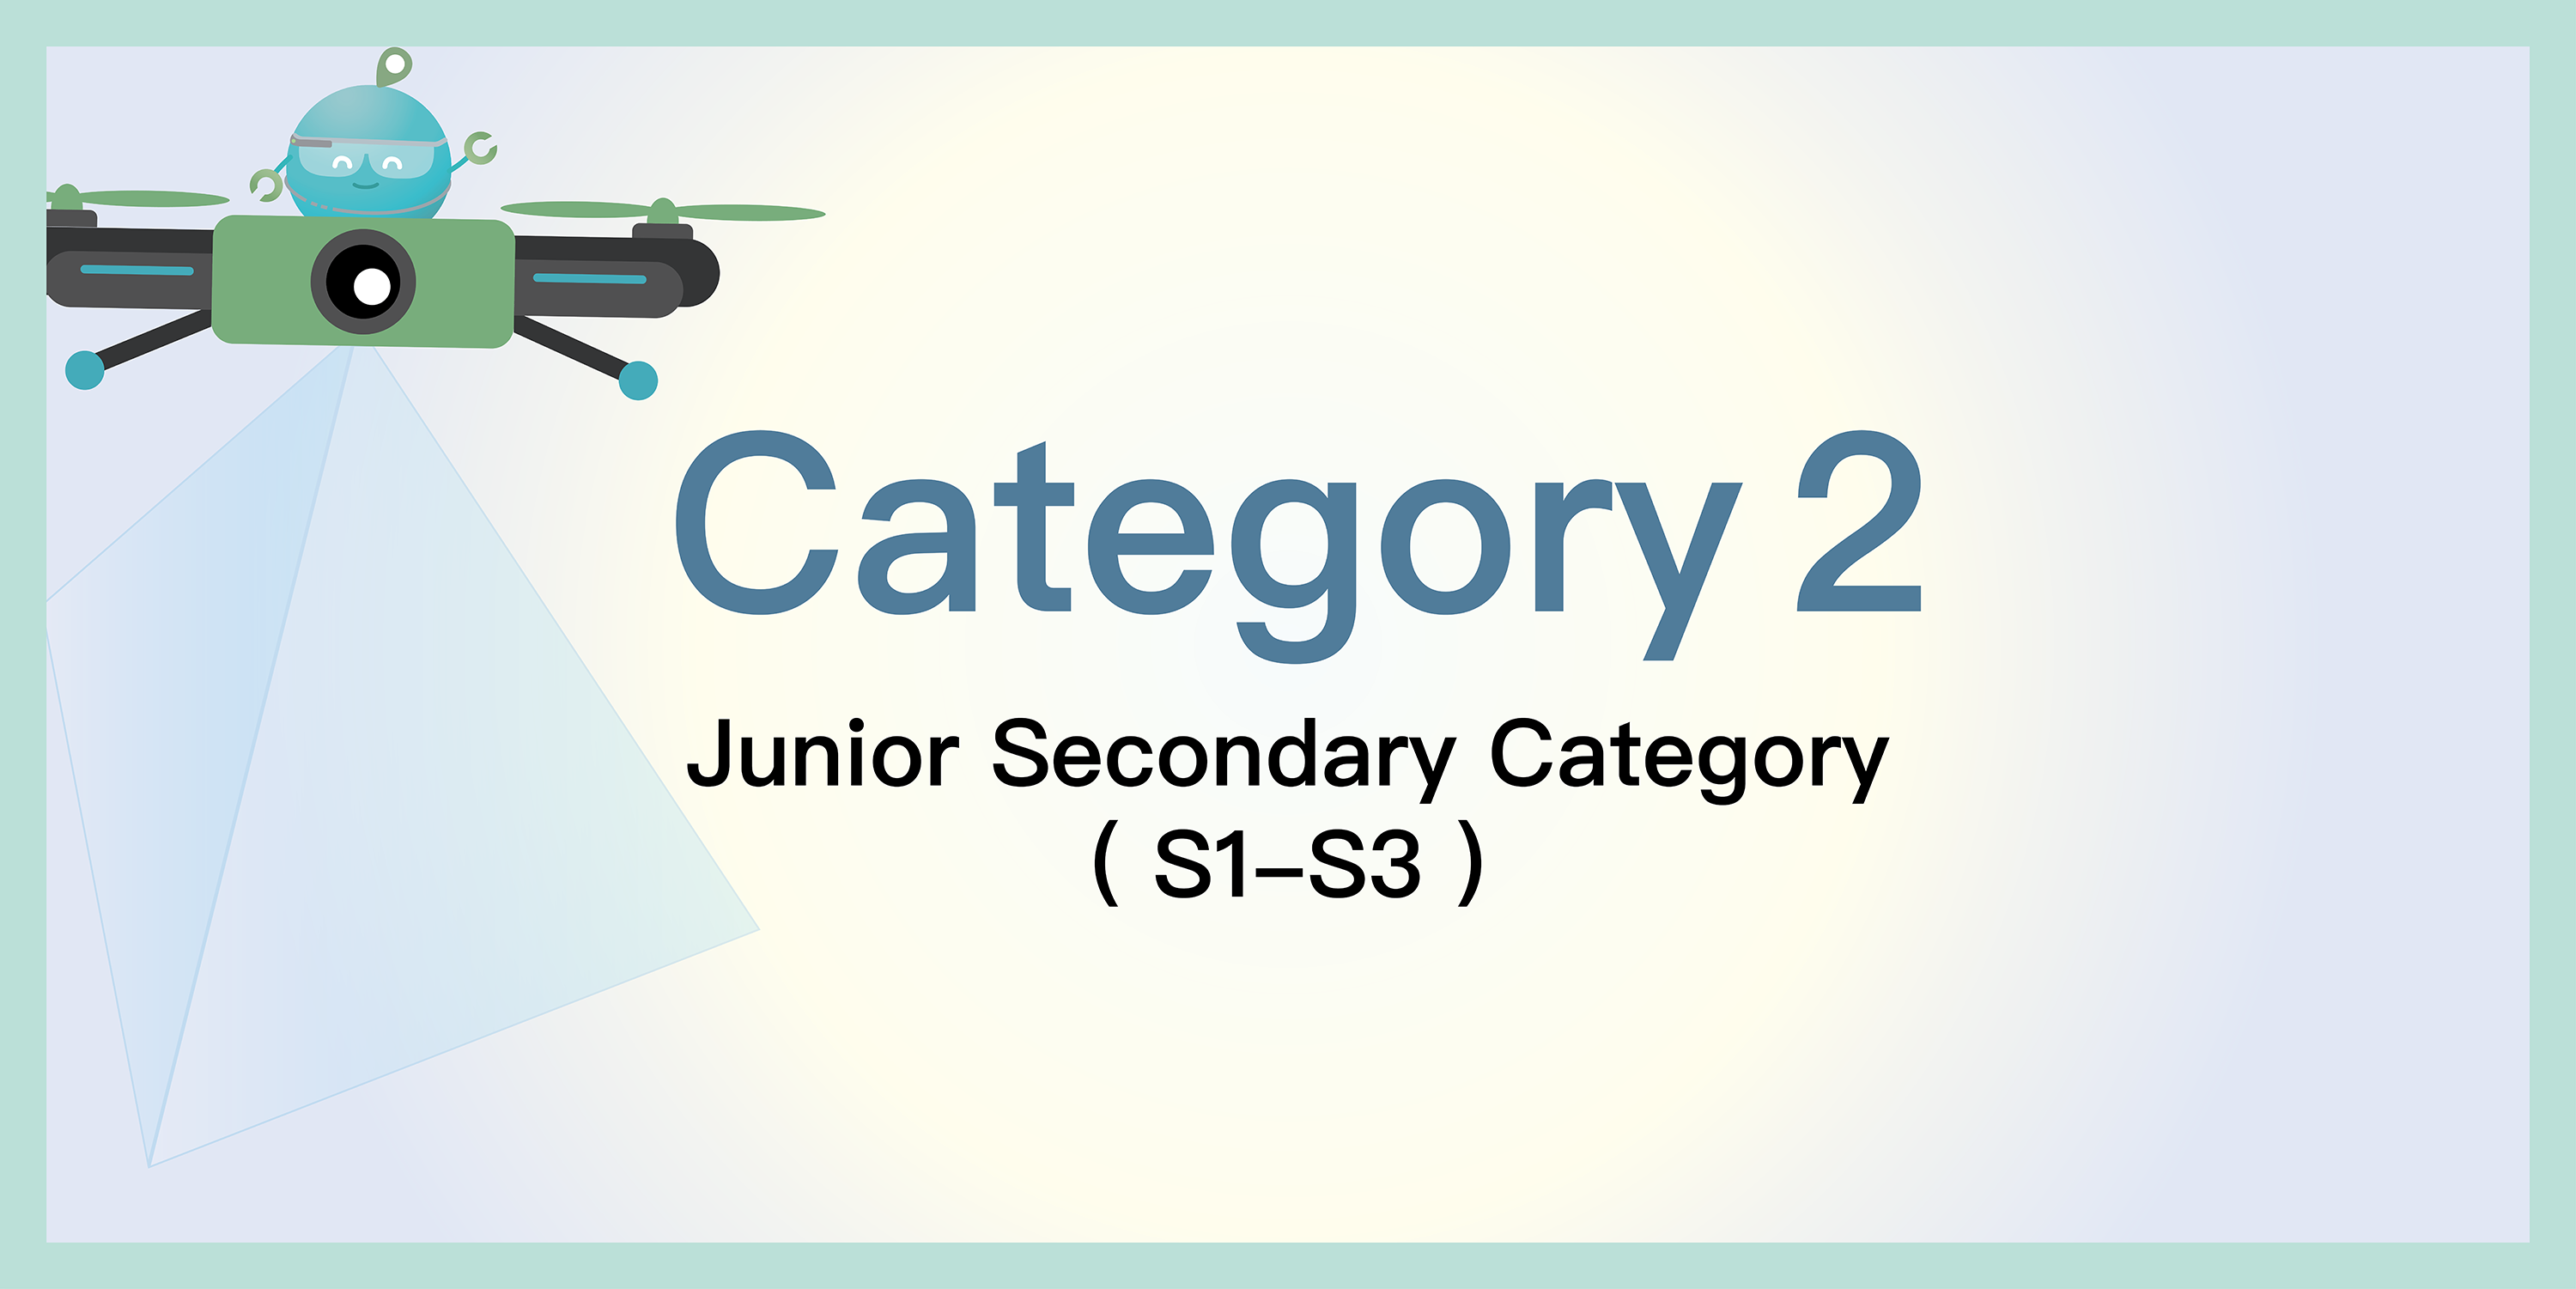 Category 3: Senior Secondary Category (S4 to S6)